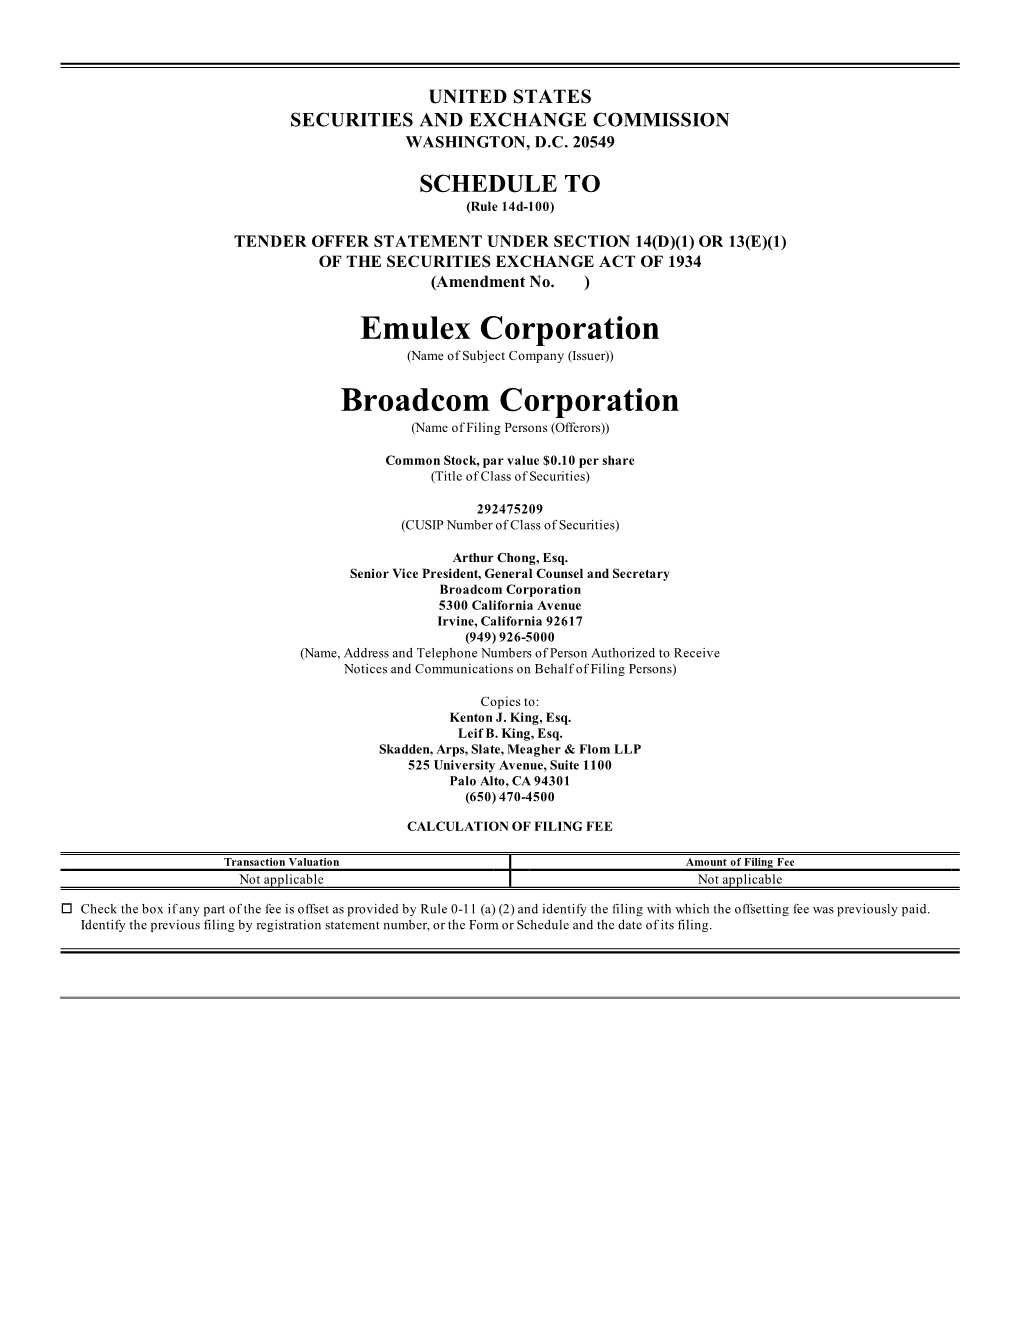 Emulex Corporation Broadcom Corporation